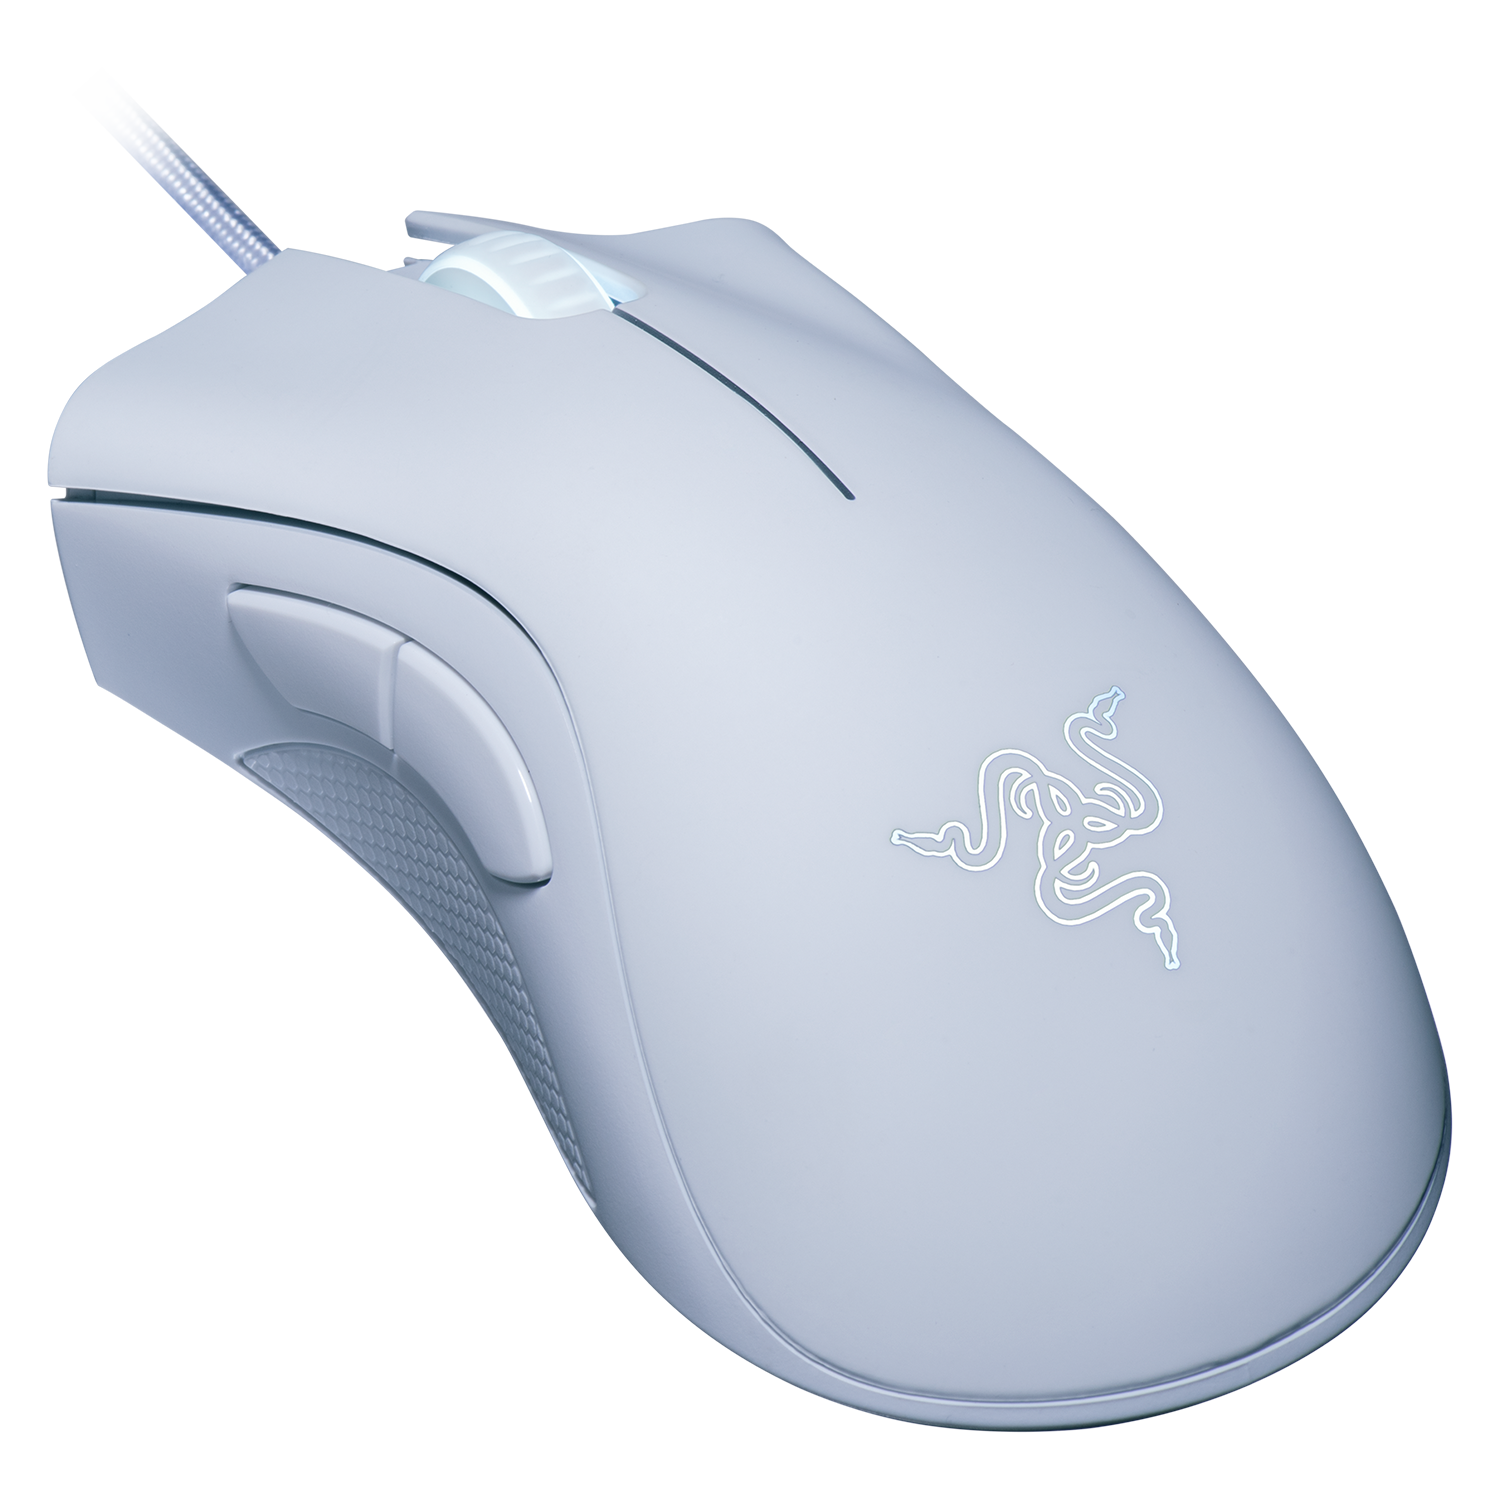 Mouse Gamer Razer Deathadder Essential - Branco (RZ01-03850200-R3U1)